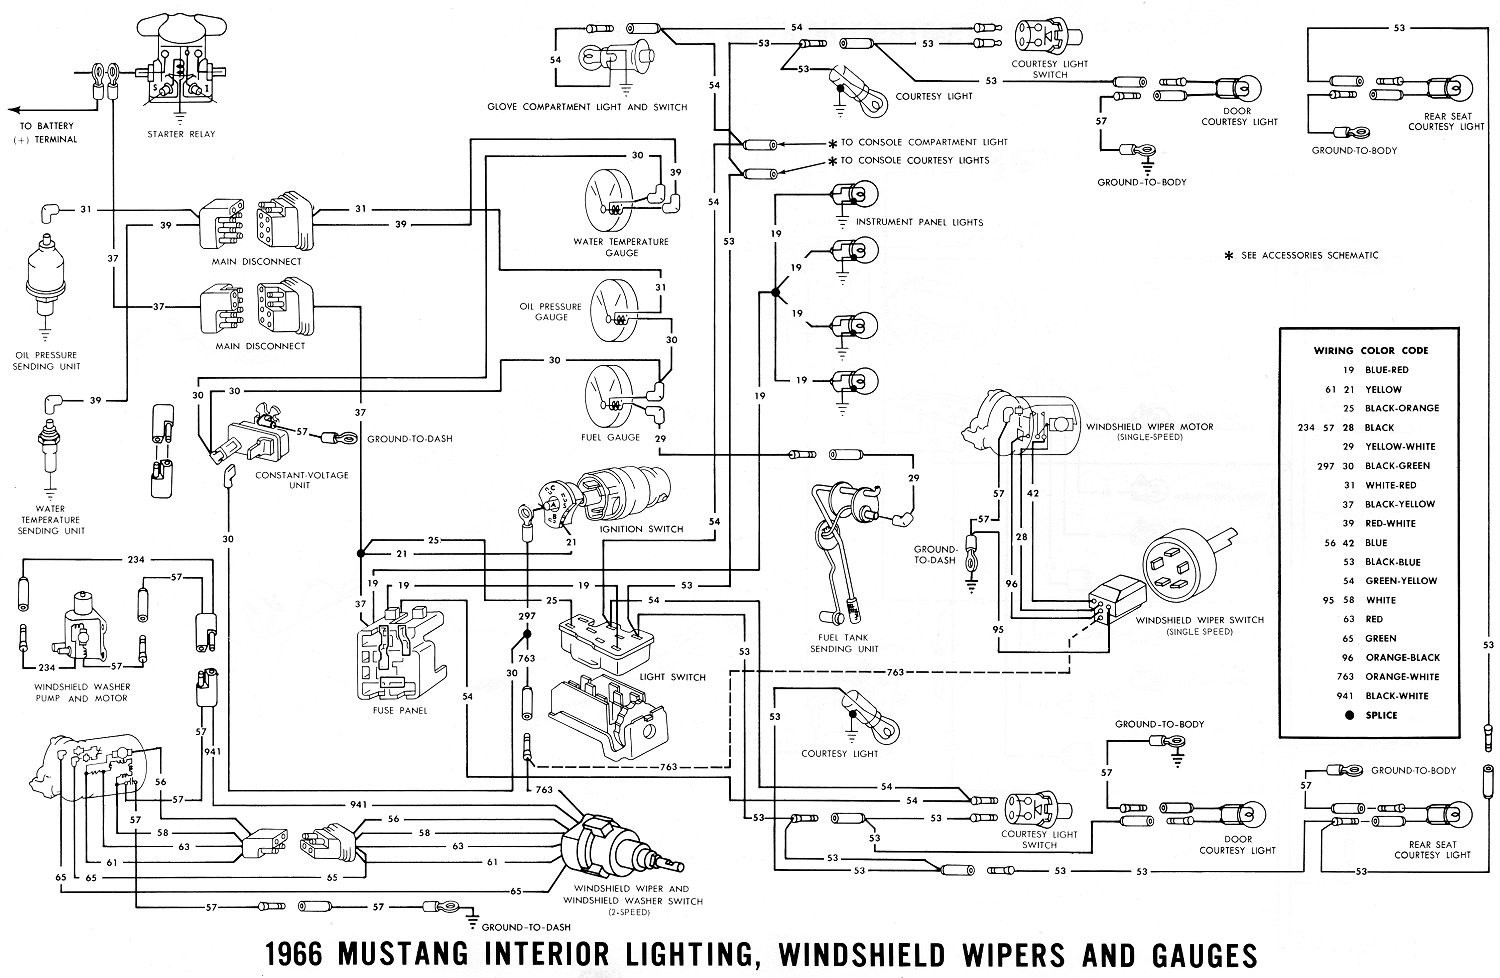 1965 Mustang Wiring Diagram Best Wiring Diagram 1966 ford Mustang Interior Lighting Windshield